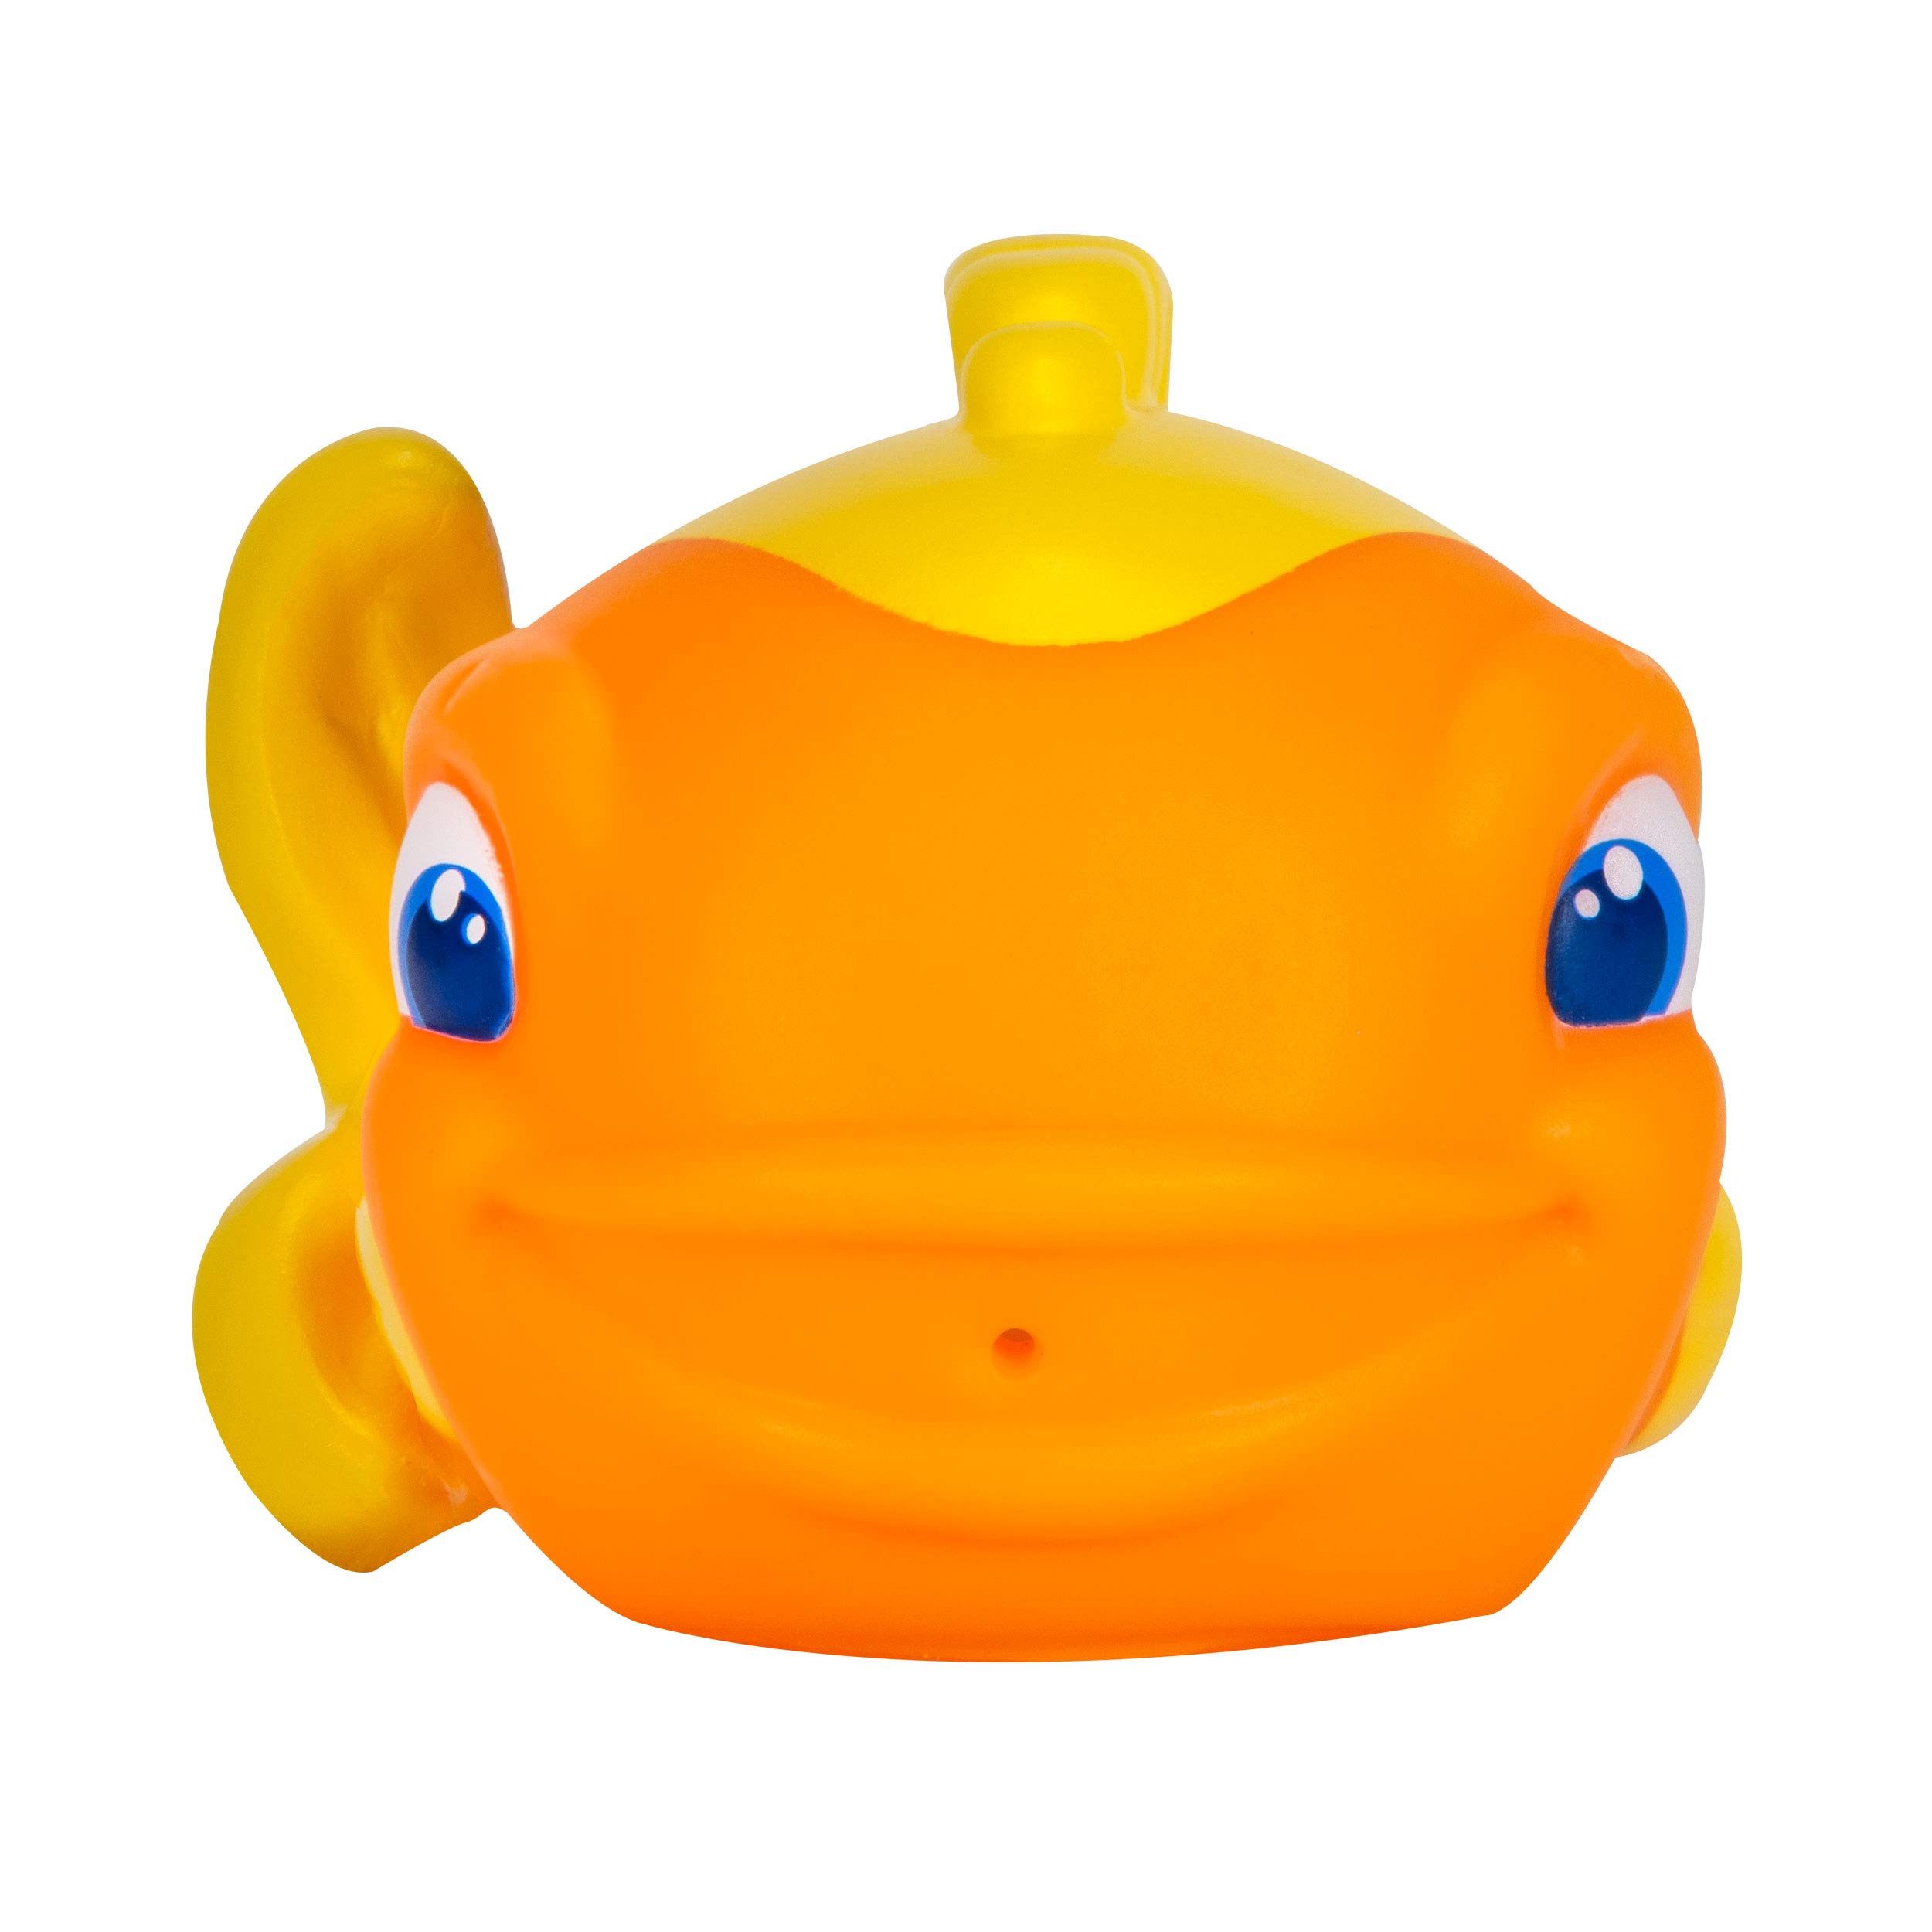 CoComelon CMW0030 Bath Fun Friends JJ, Fish & Turtle Bath Toy for Children from 18 Months